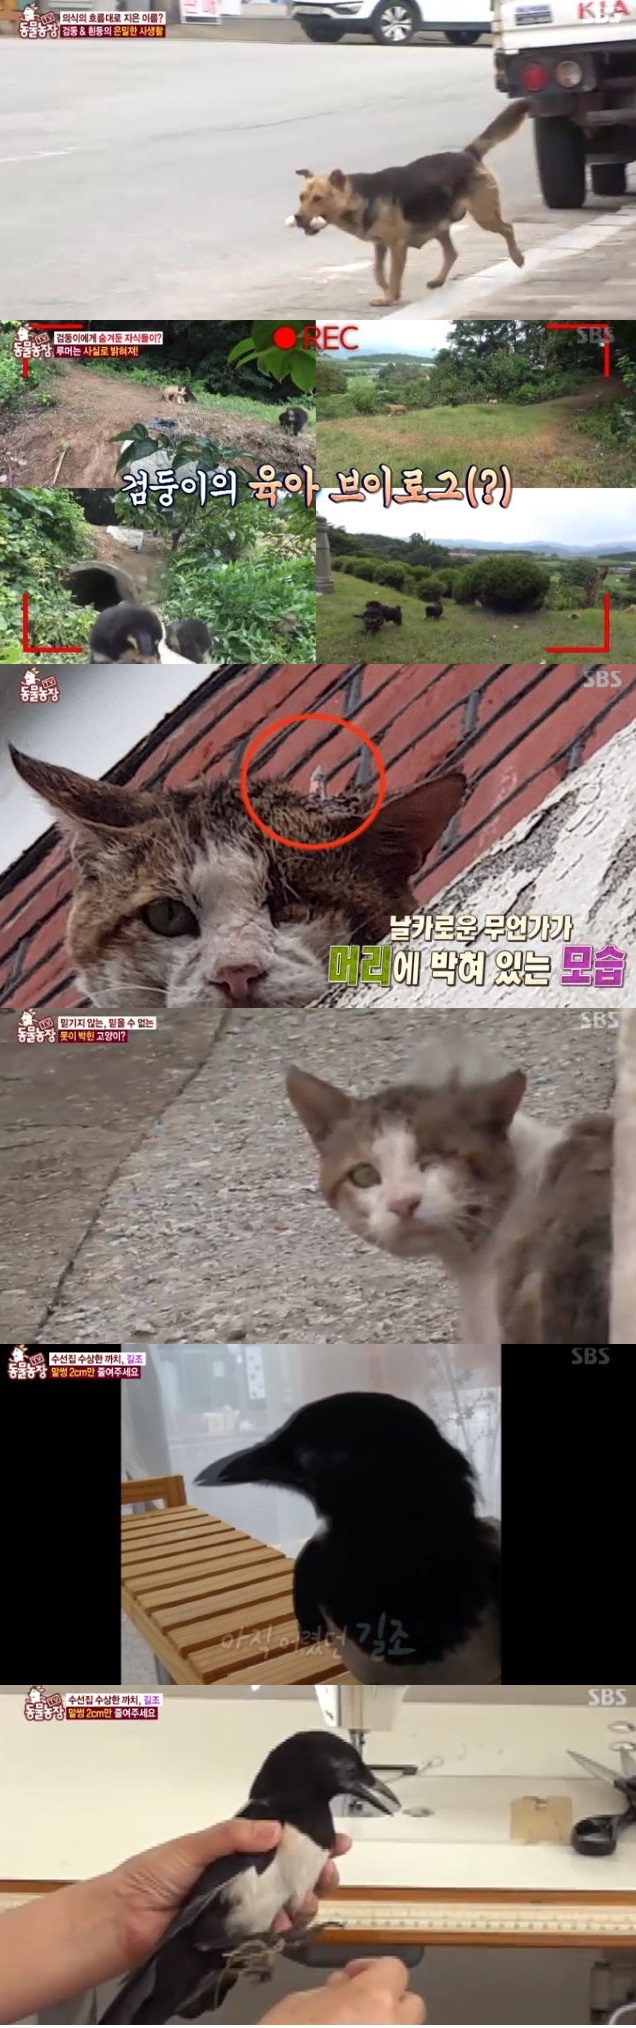 SBS 'TV동물농장' 캡처